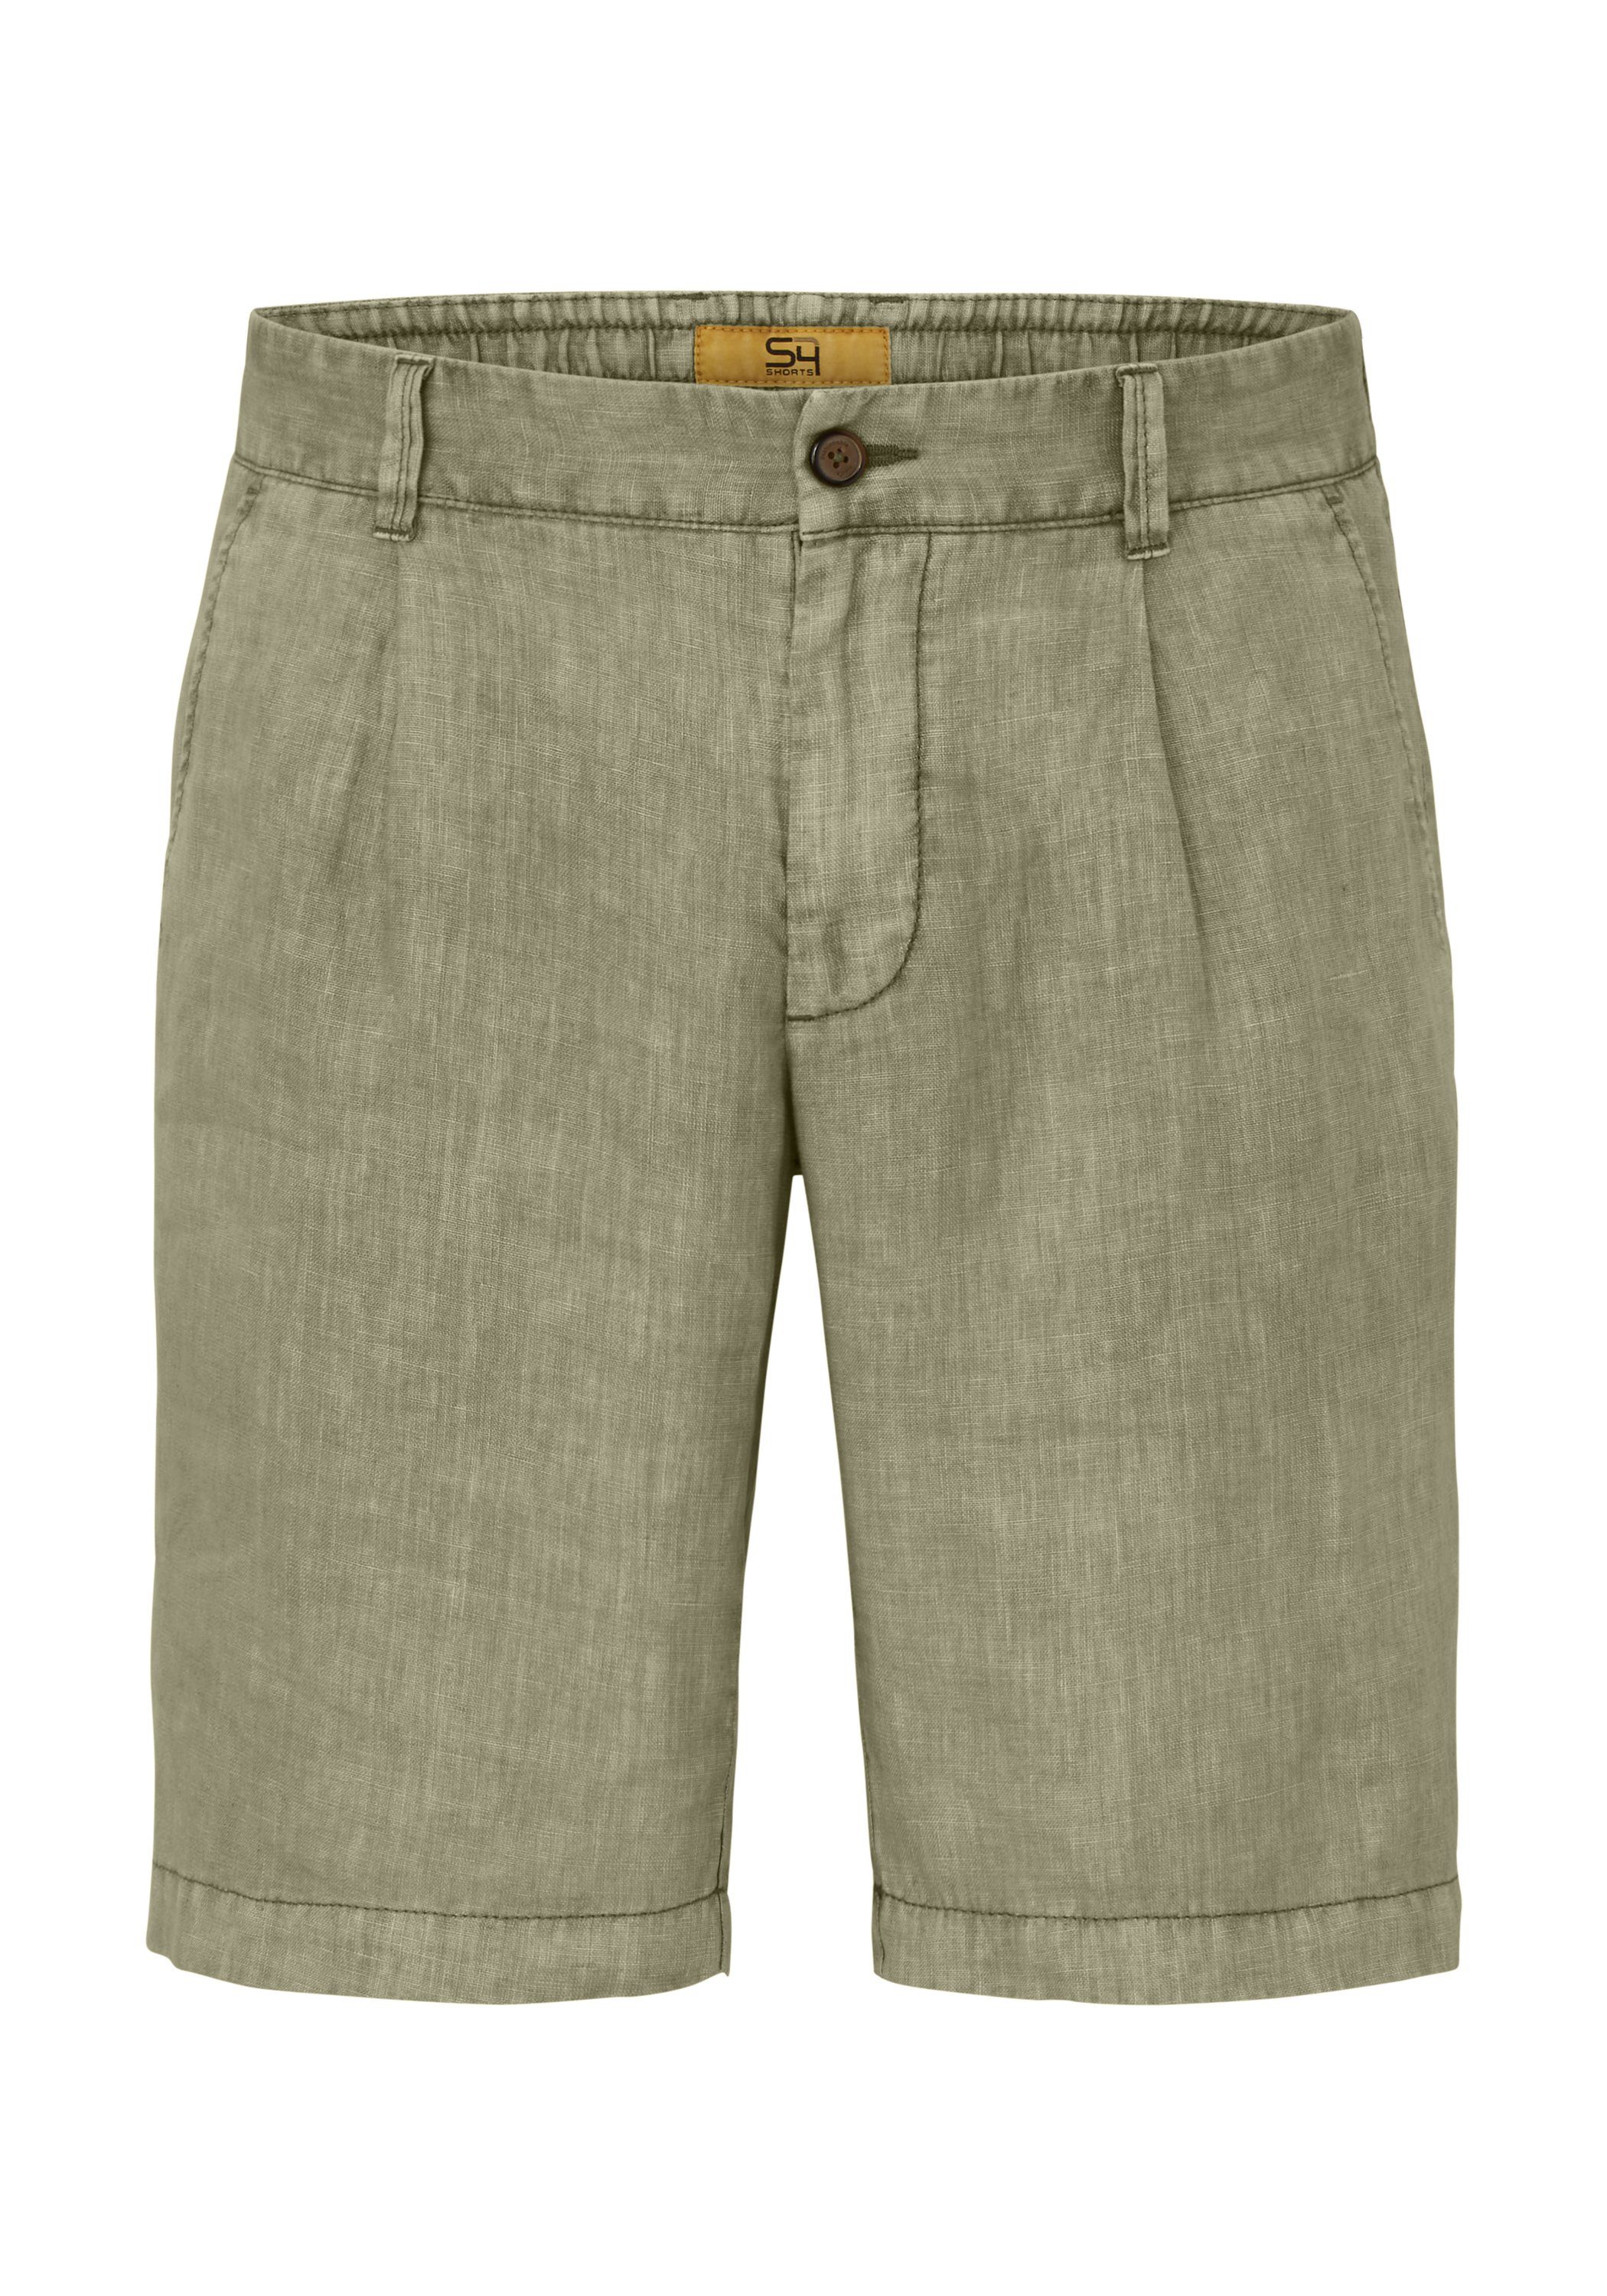 MAUI S4 Jackets leaf Bermudas Leinen Leichte Shorts aus 2 tea Fit Modern